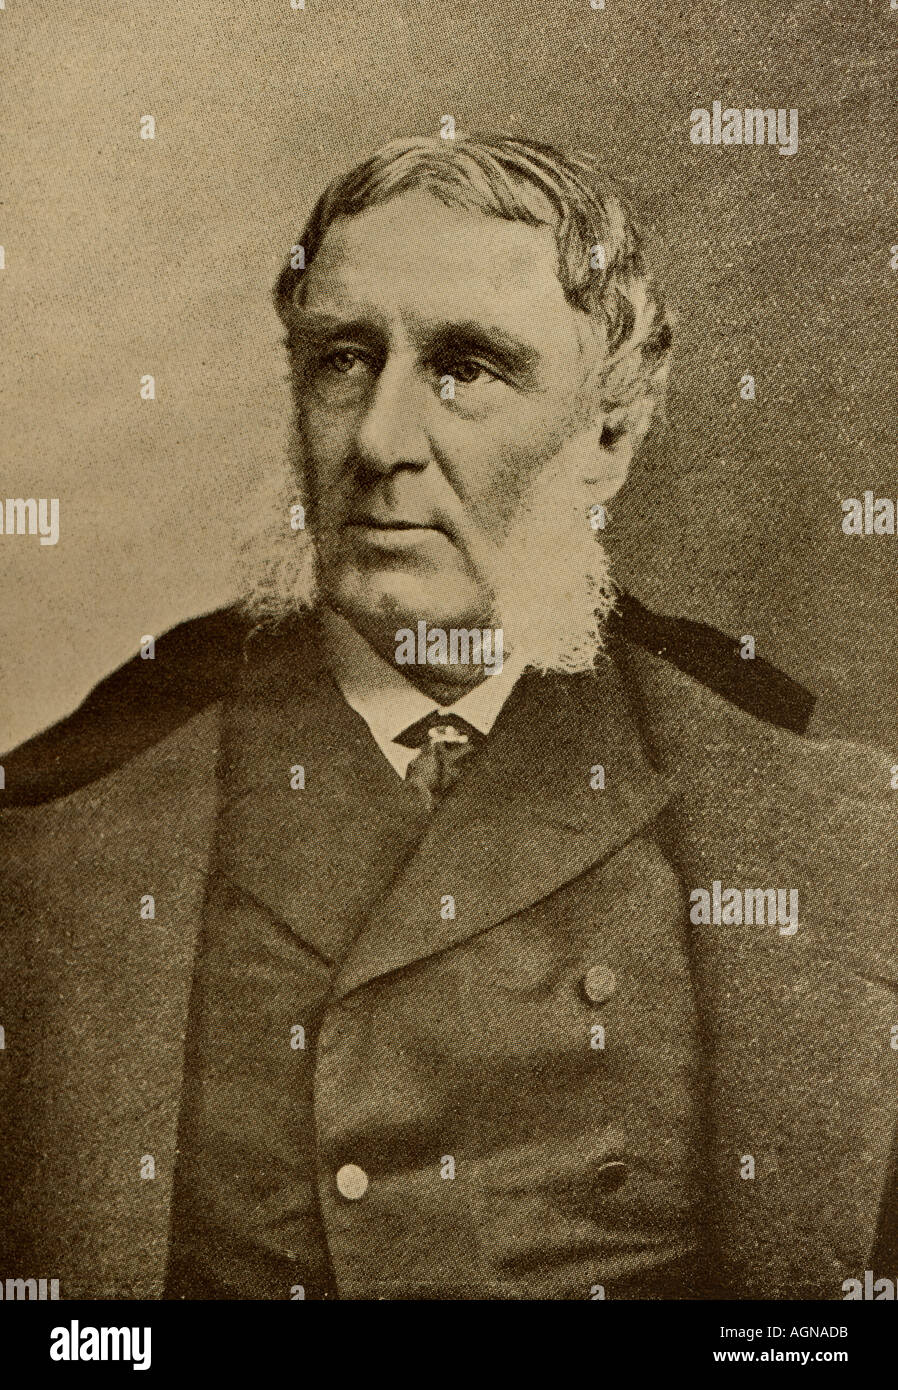 George William Curtis, 1824 - 1892. American writer, public speaker, editor and reformer. Stock Photo